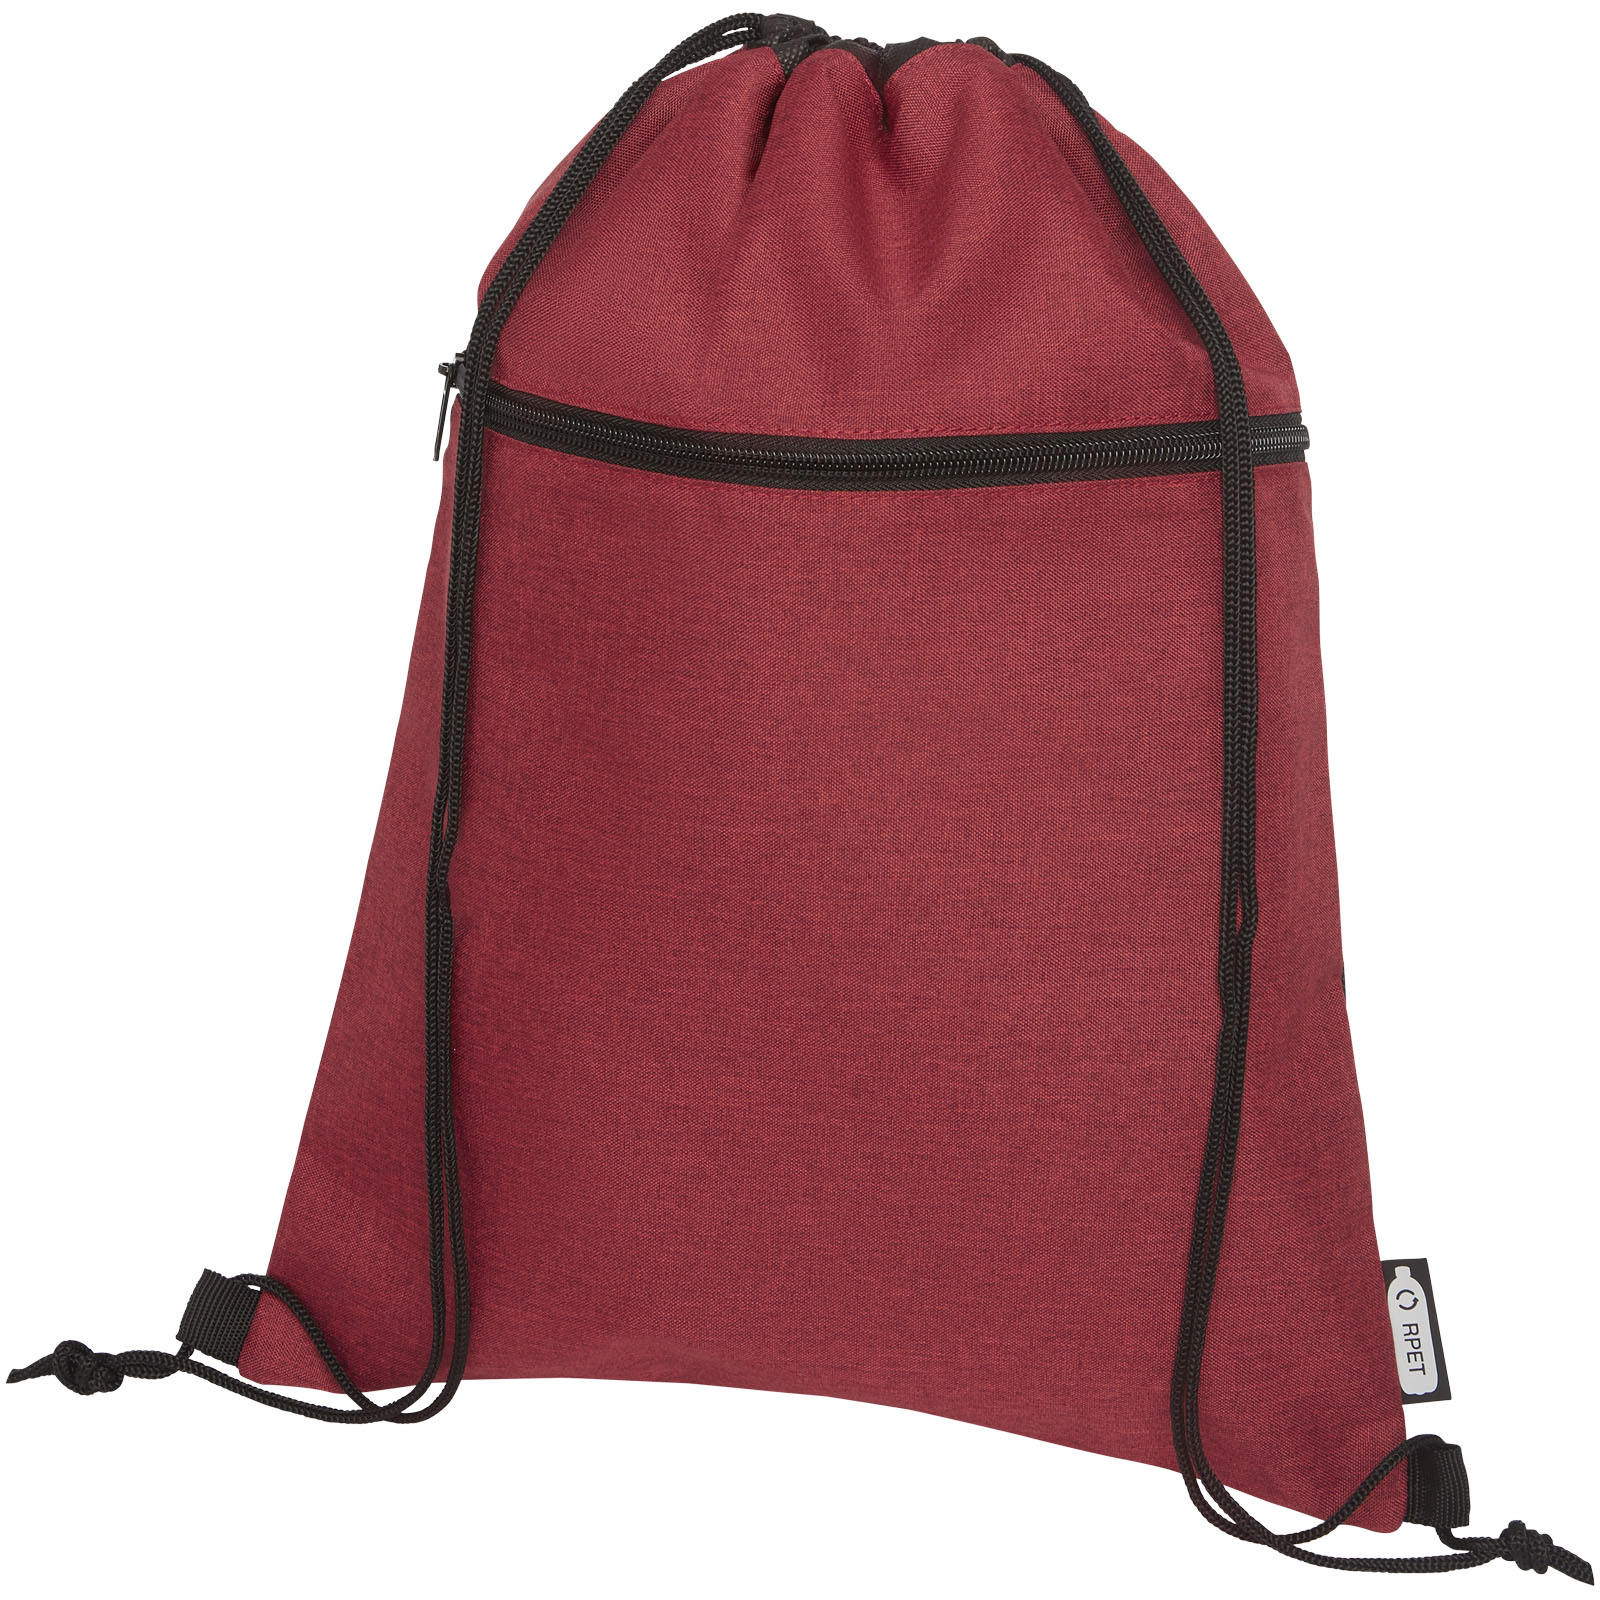 Bags - Ross RPET drawstring bag 5L